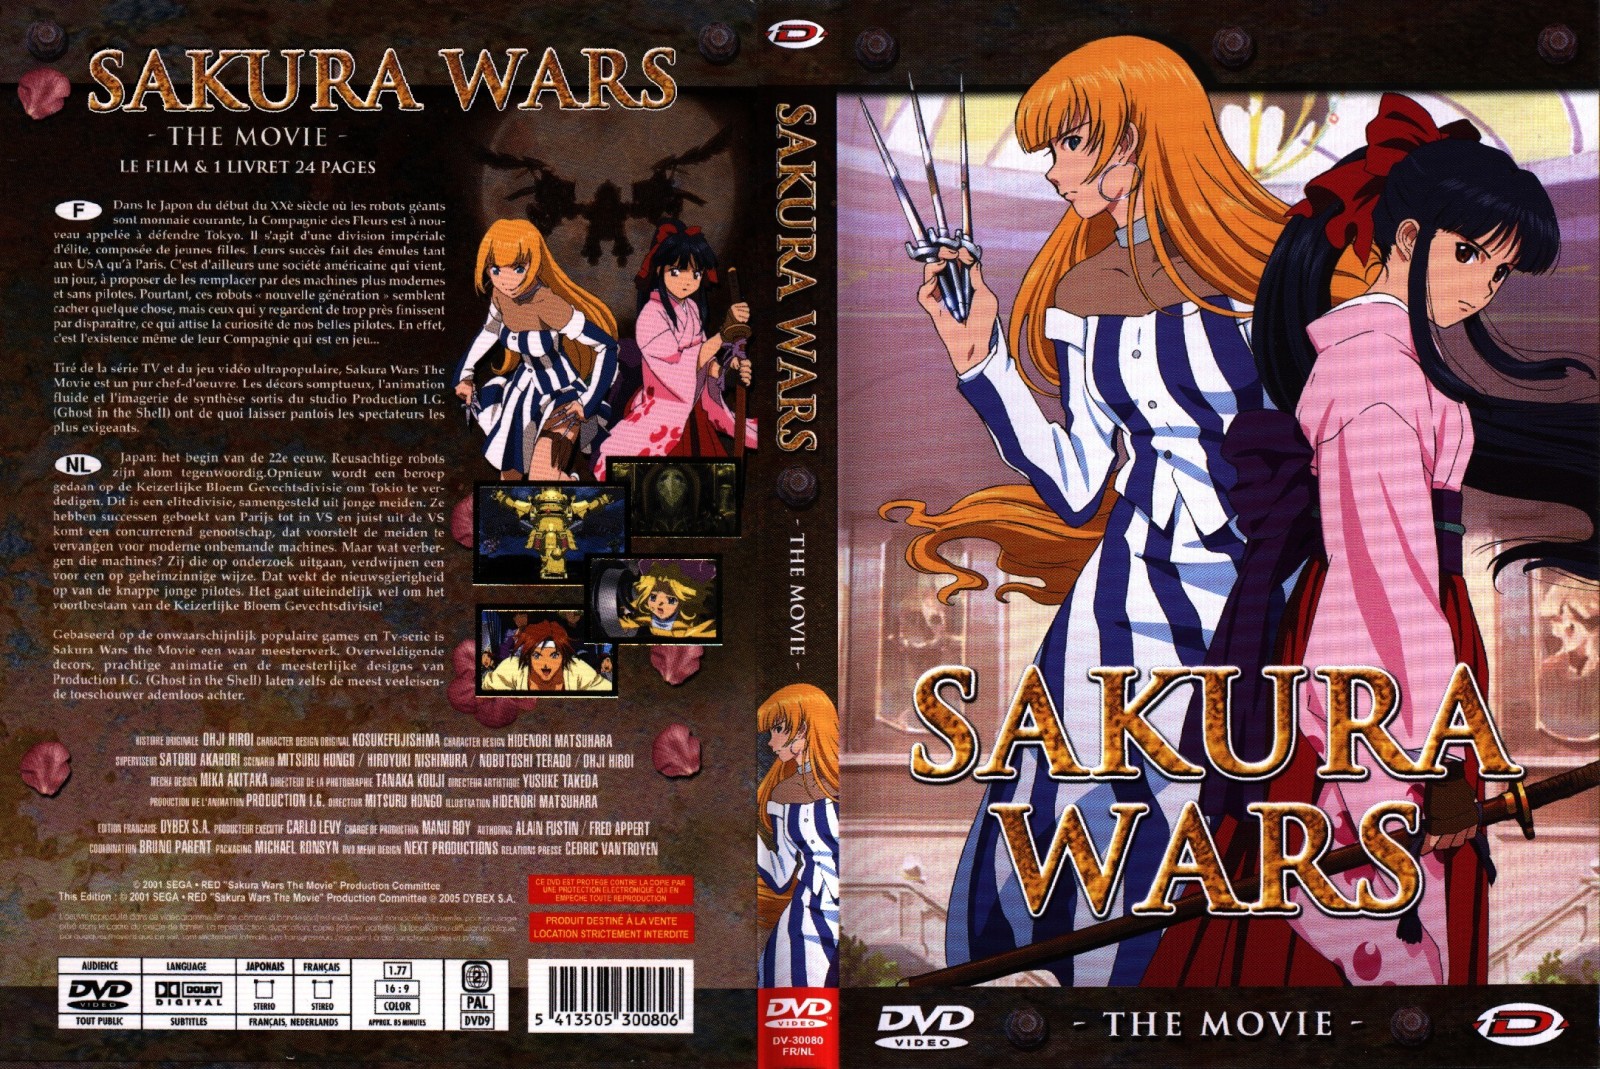 Jaquette DVD Sakura wars le film